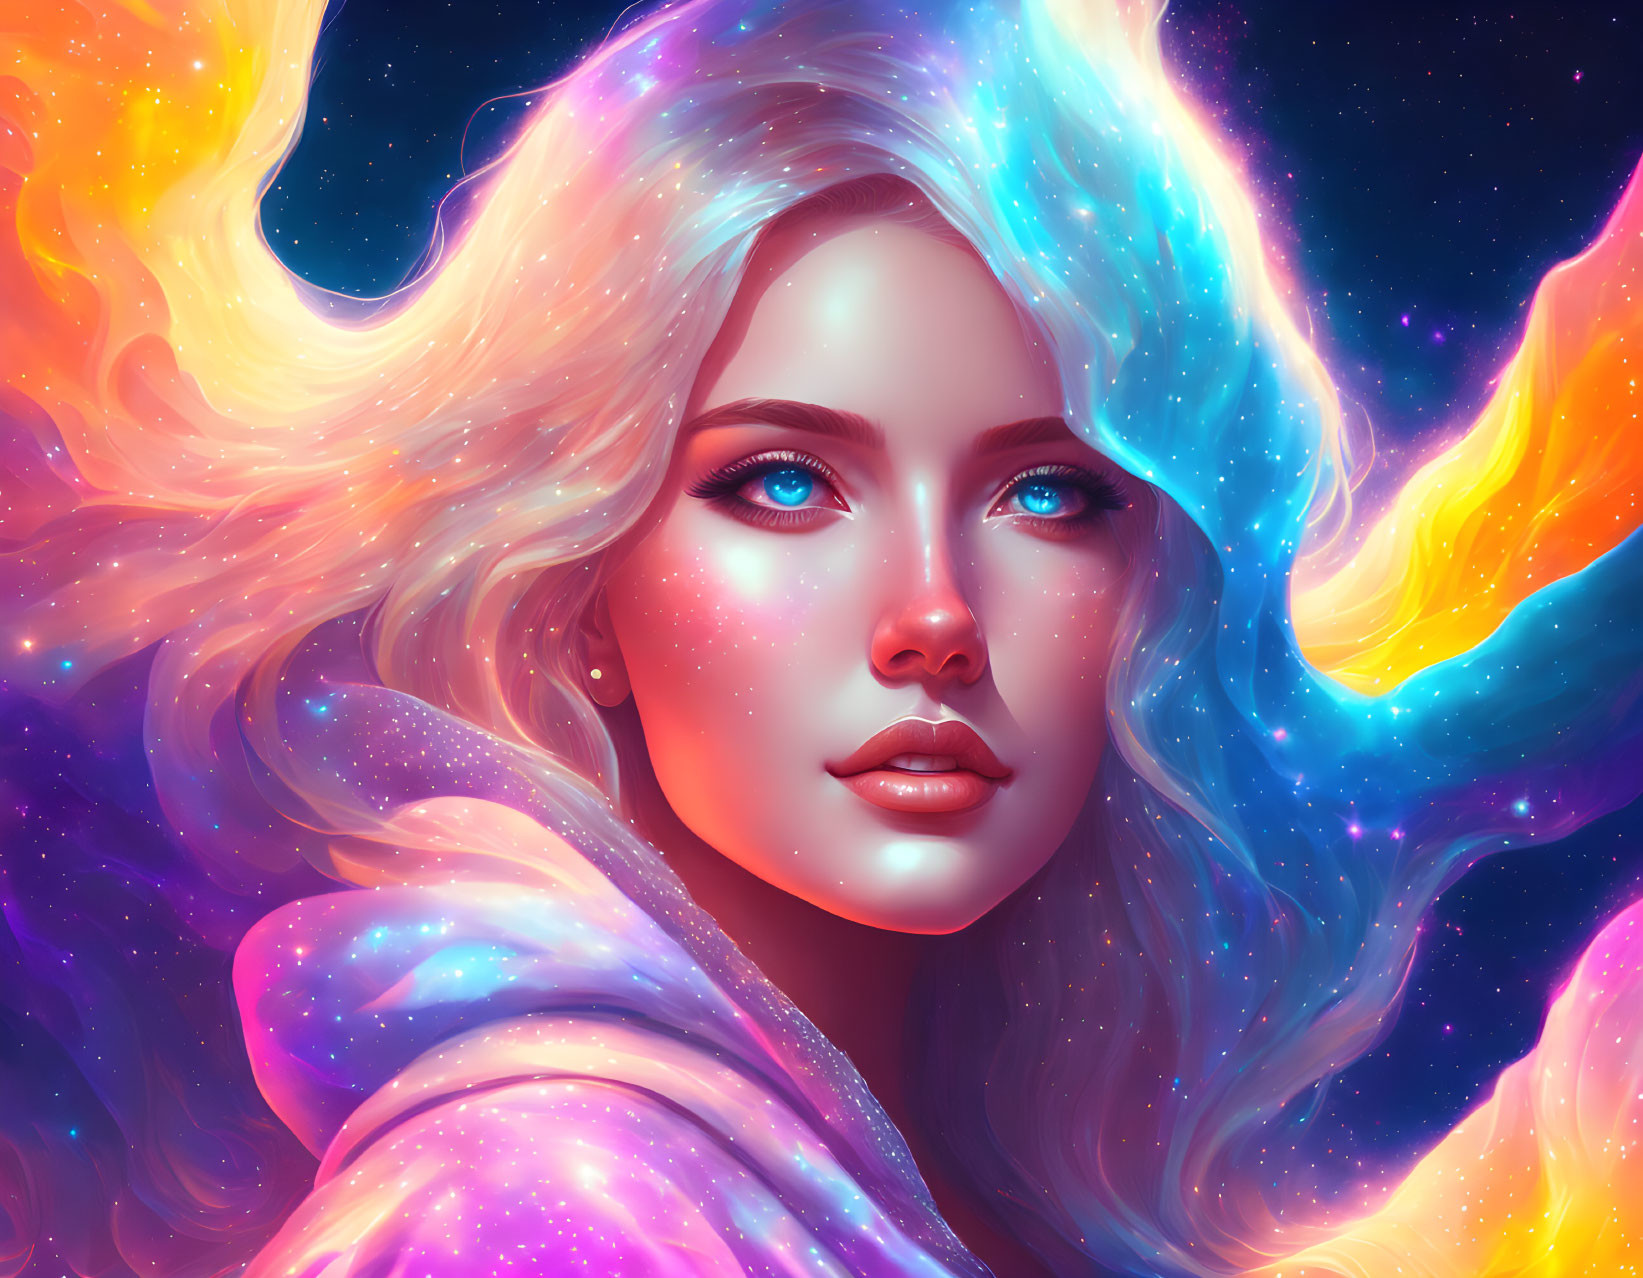 Digital Artwork: Woman with Cosmic Hair and Nebula Colors